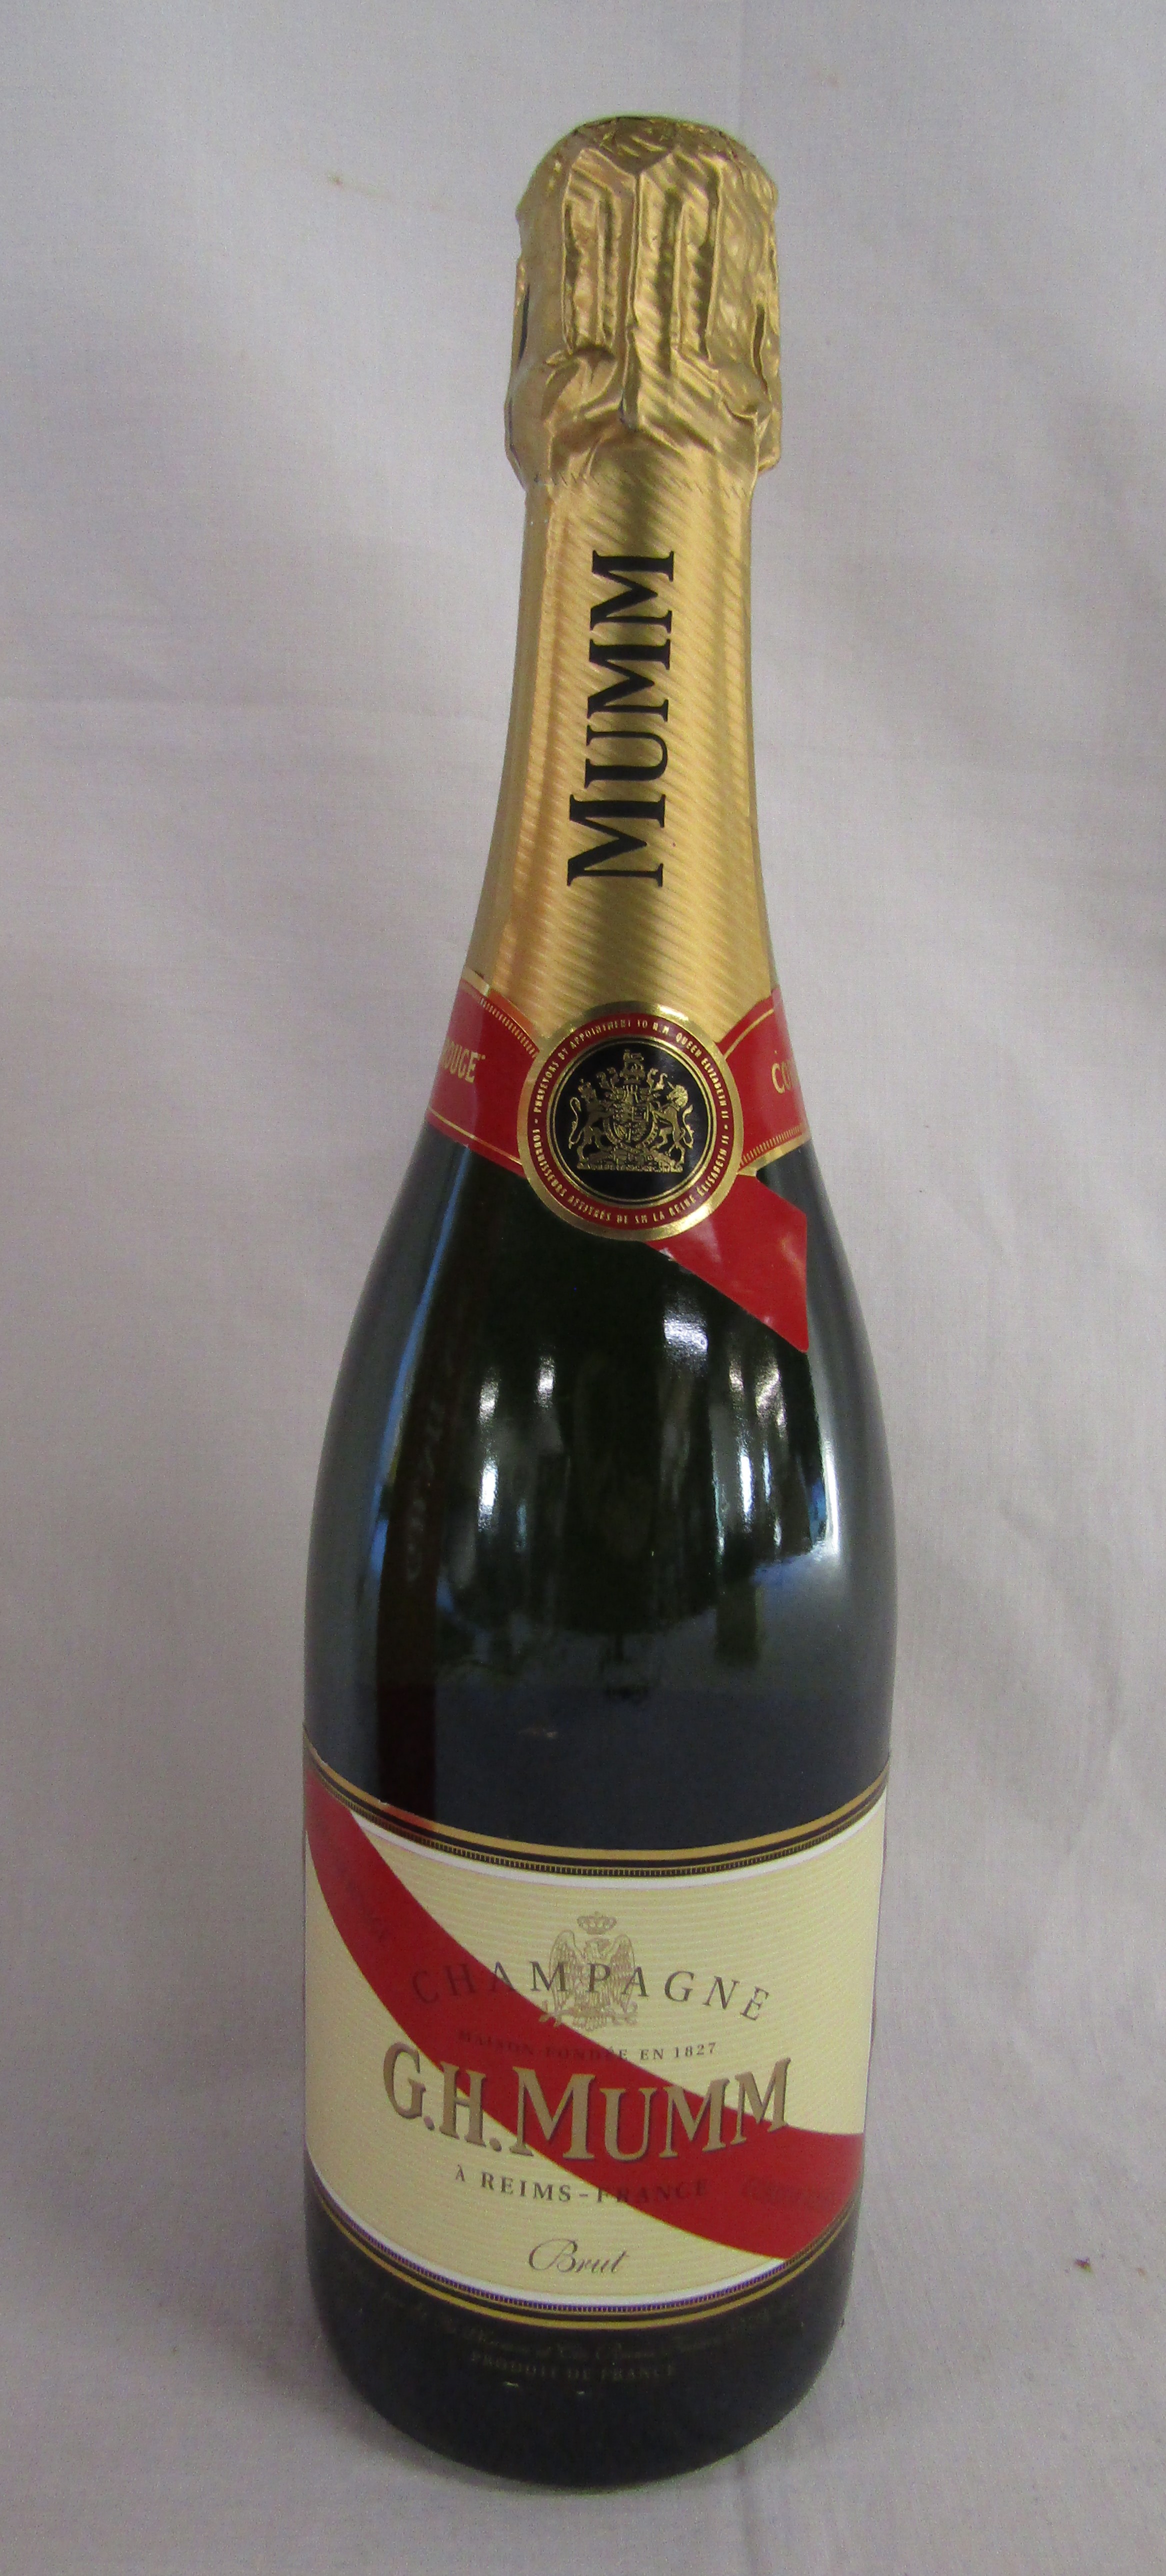 G.H.Mumm Cordon Rouge Brut boxed Champagne - Image 2 of 3